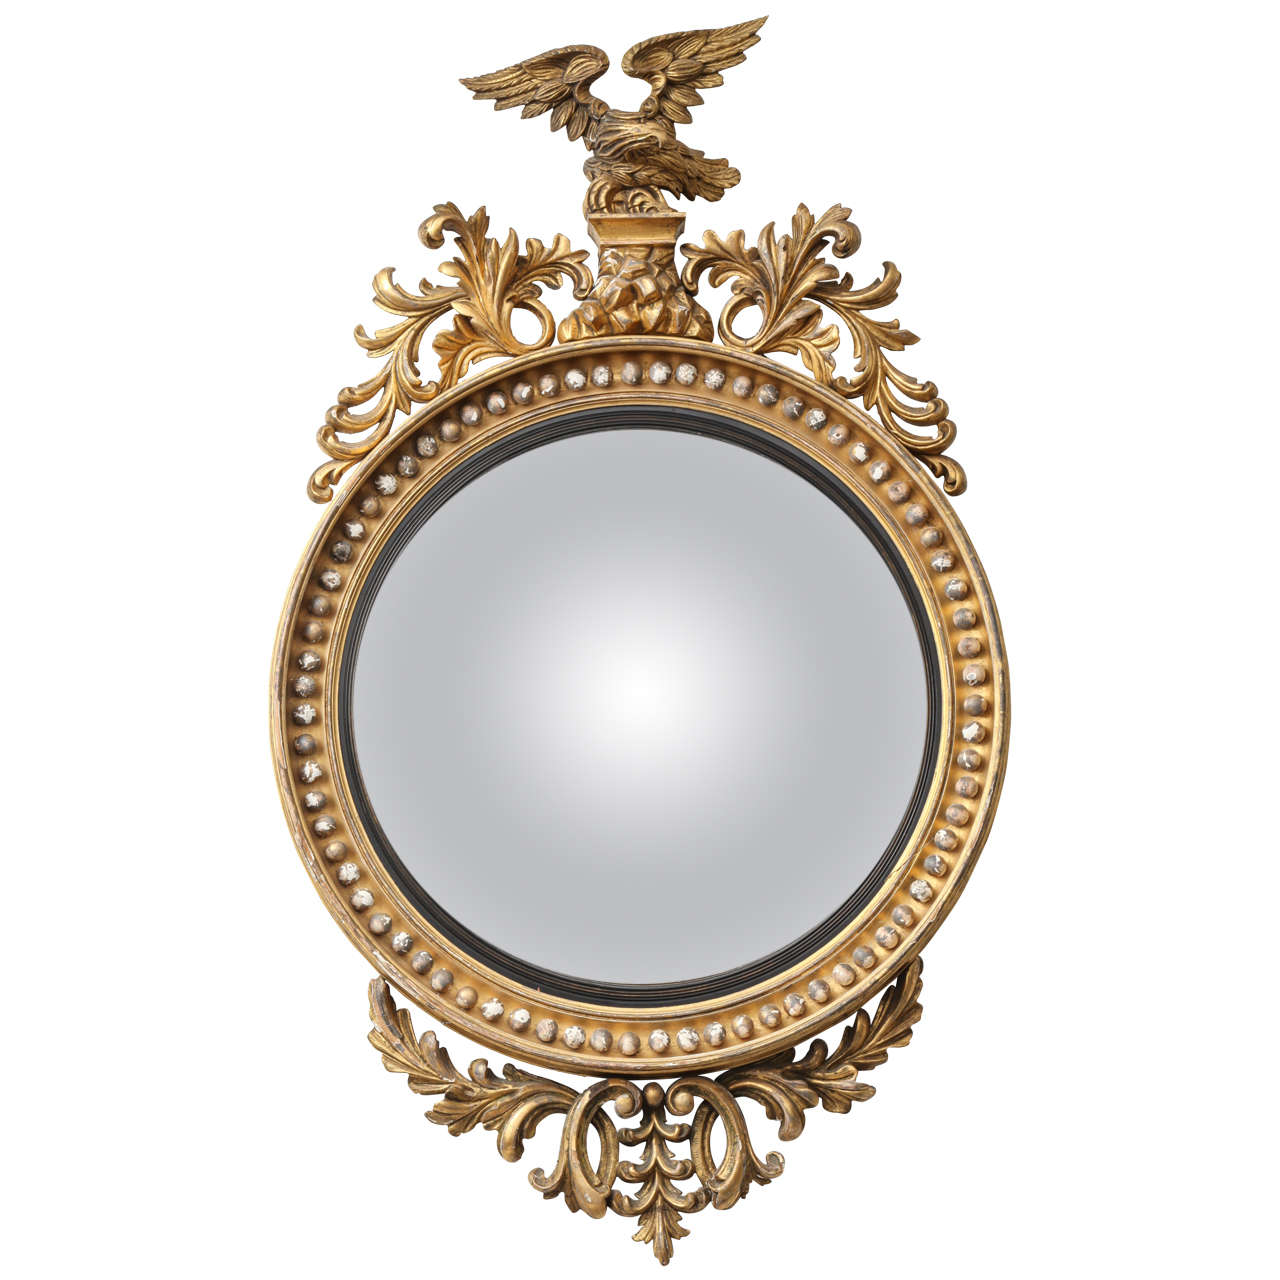 A Rare Large English Regency Style Convex Mirror